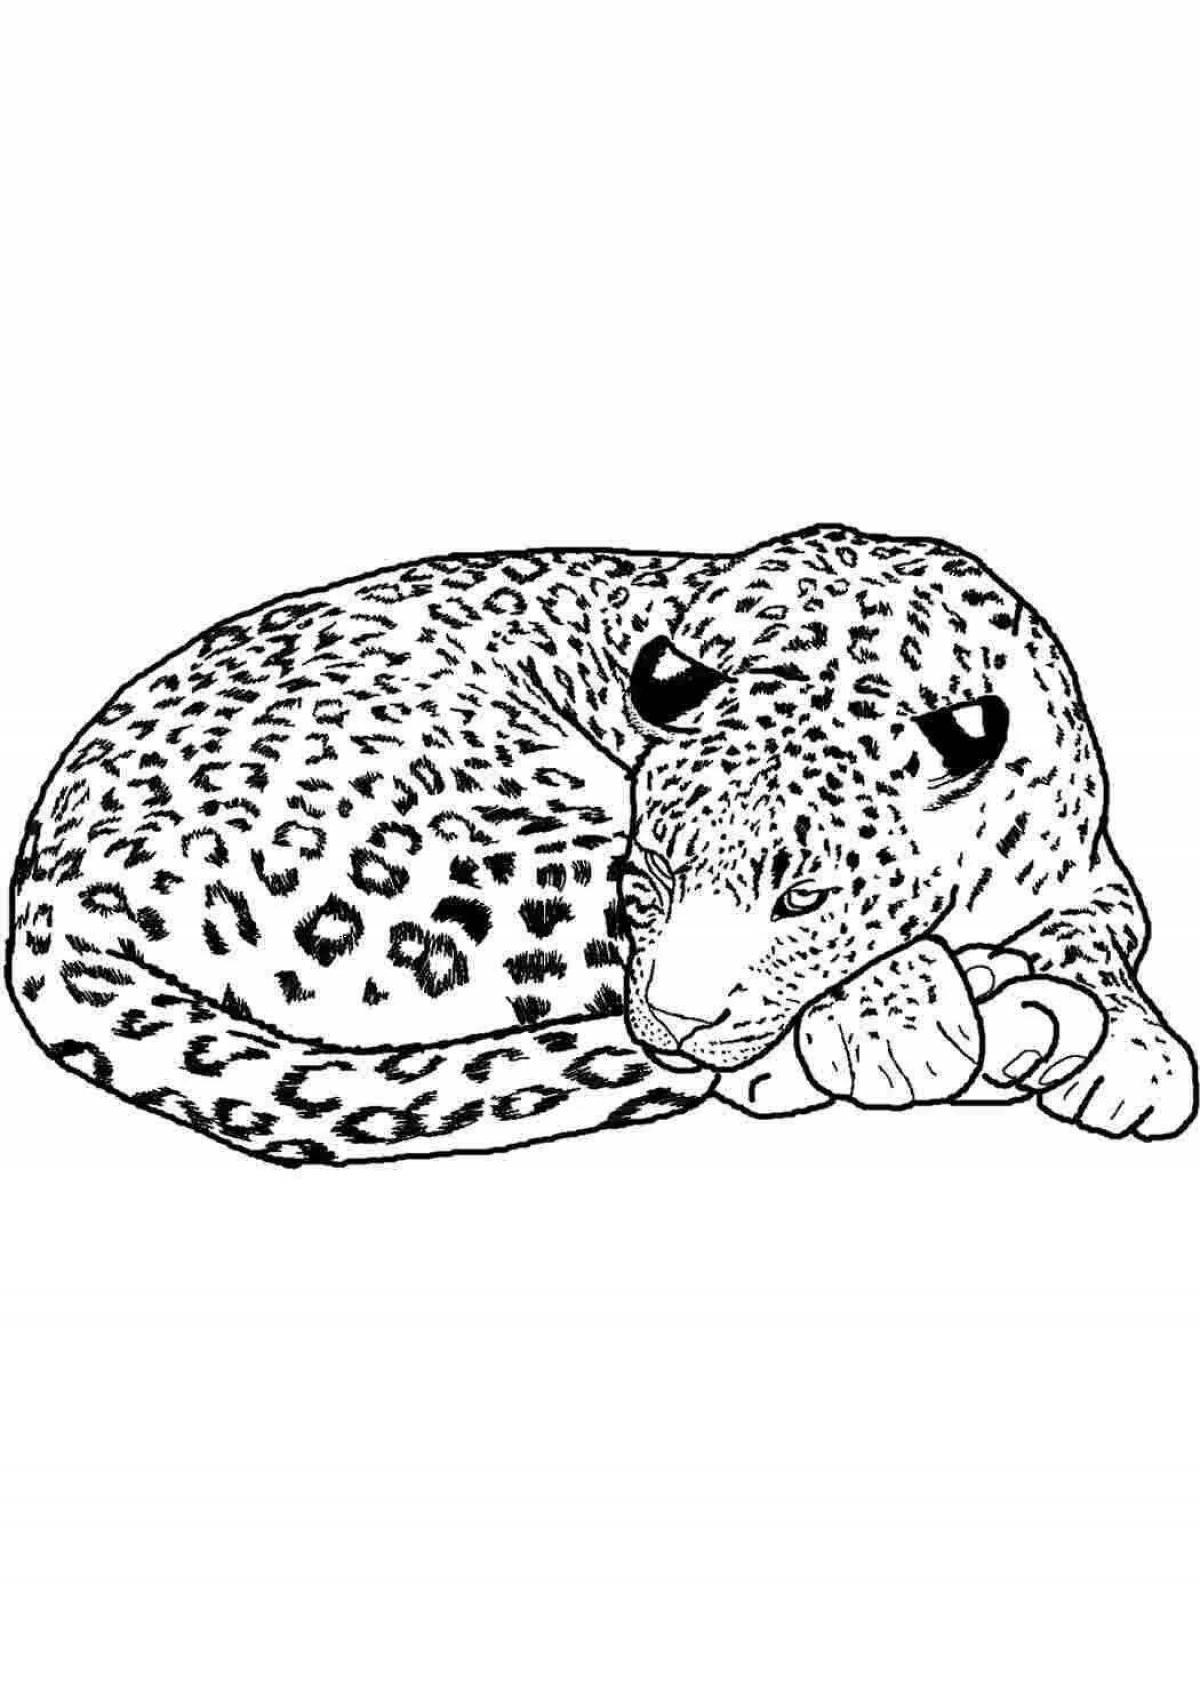 Coloring page graceful snow leopard